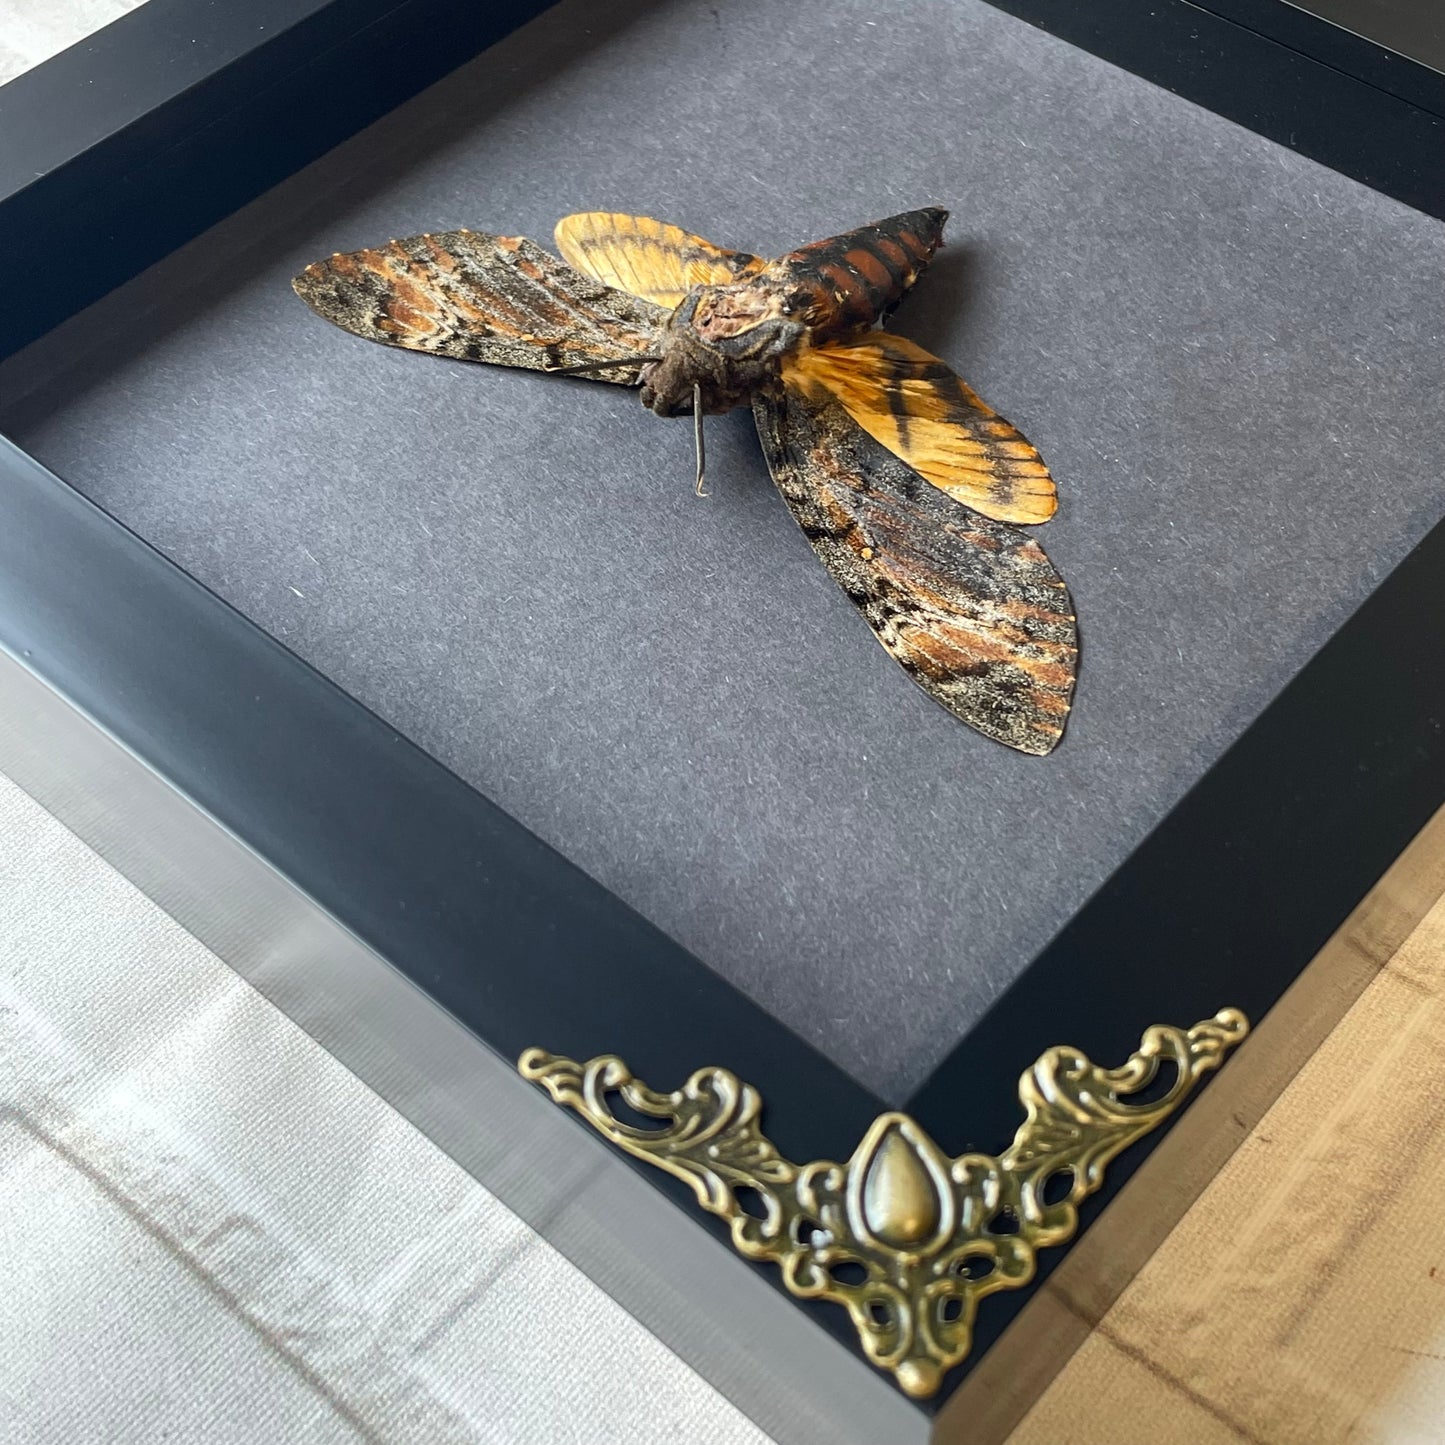 Lesser Death's Head Hawk Moth (Acherontia styx) in Deep Baroque Style Shadow Box Frame Display